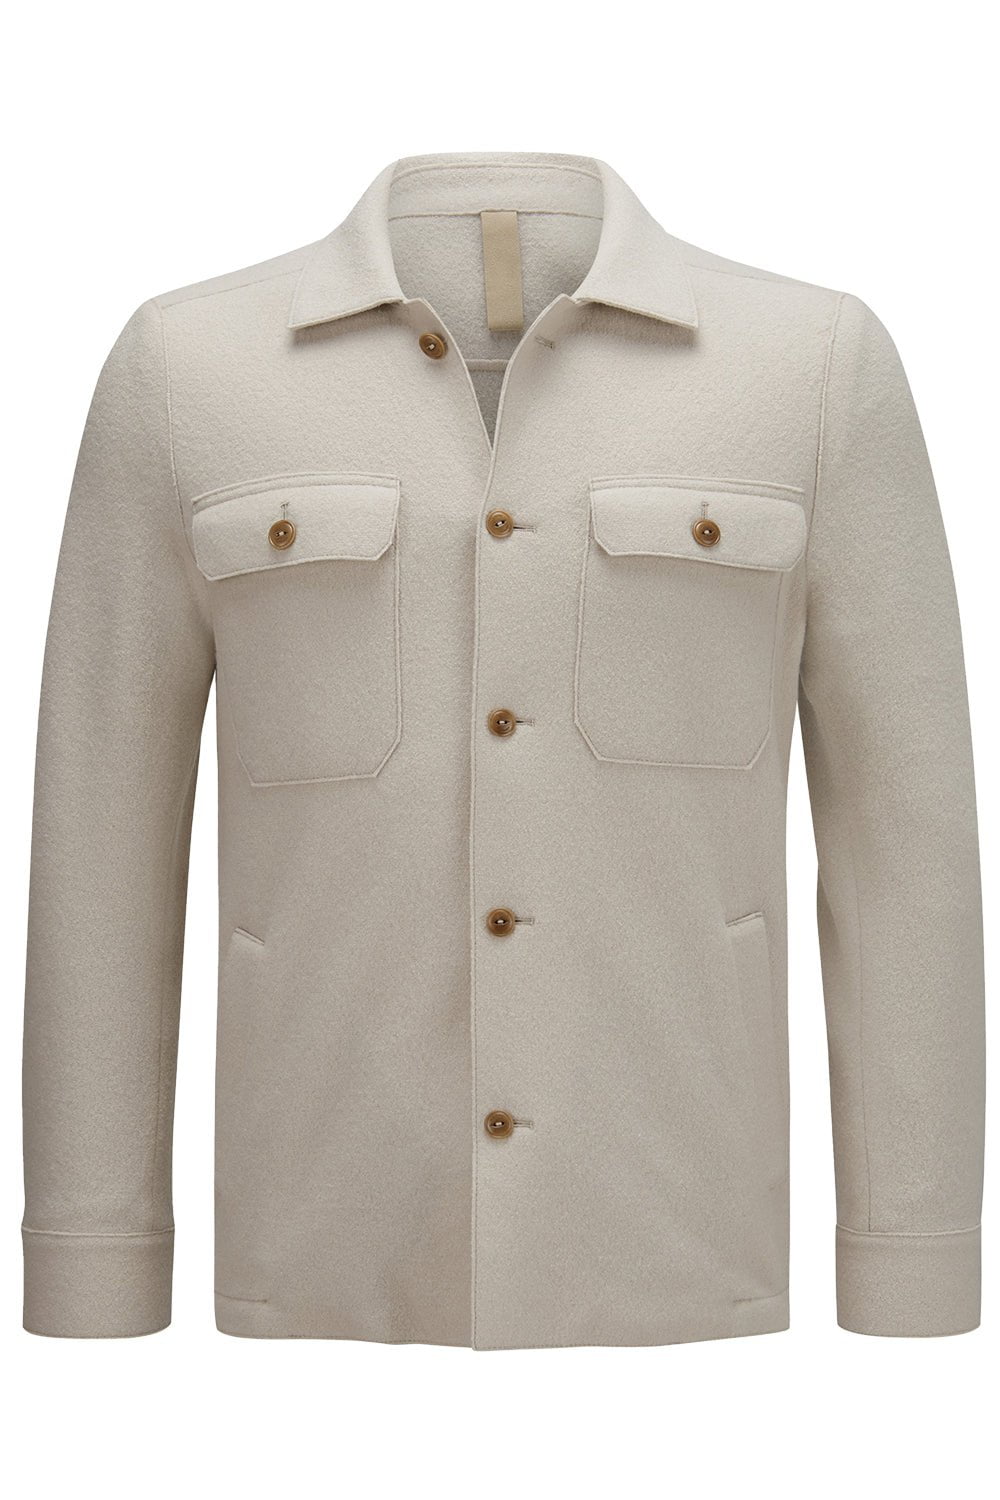 ELEVENTY-Four Pocket Shirt Jacket - Sand-